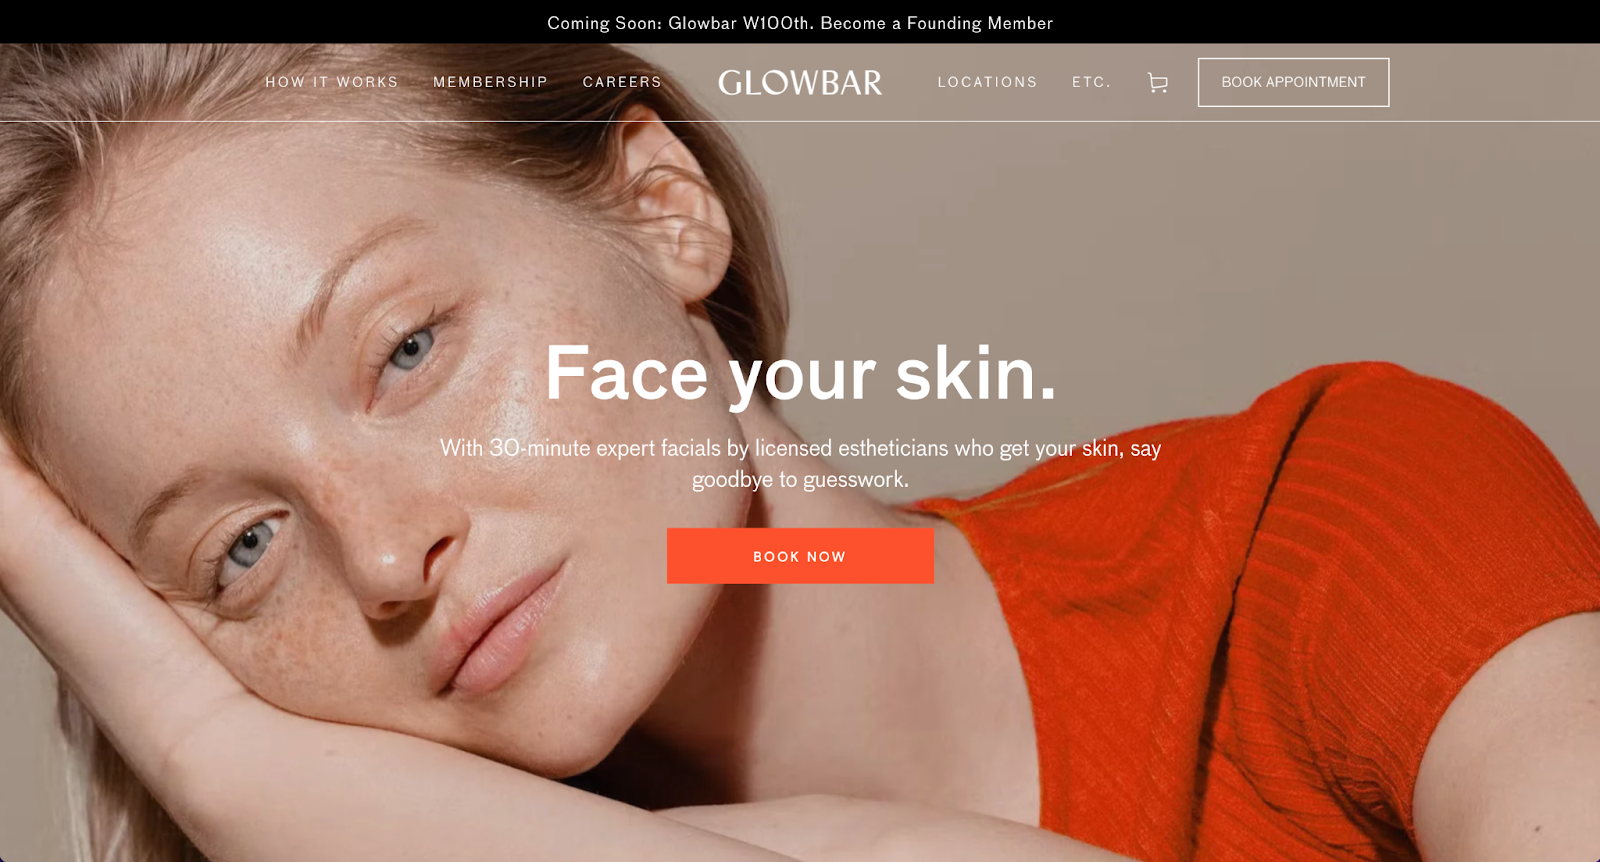 spa website examples, glowbar